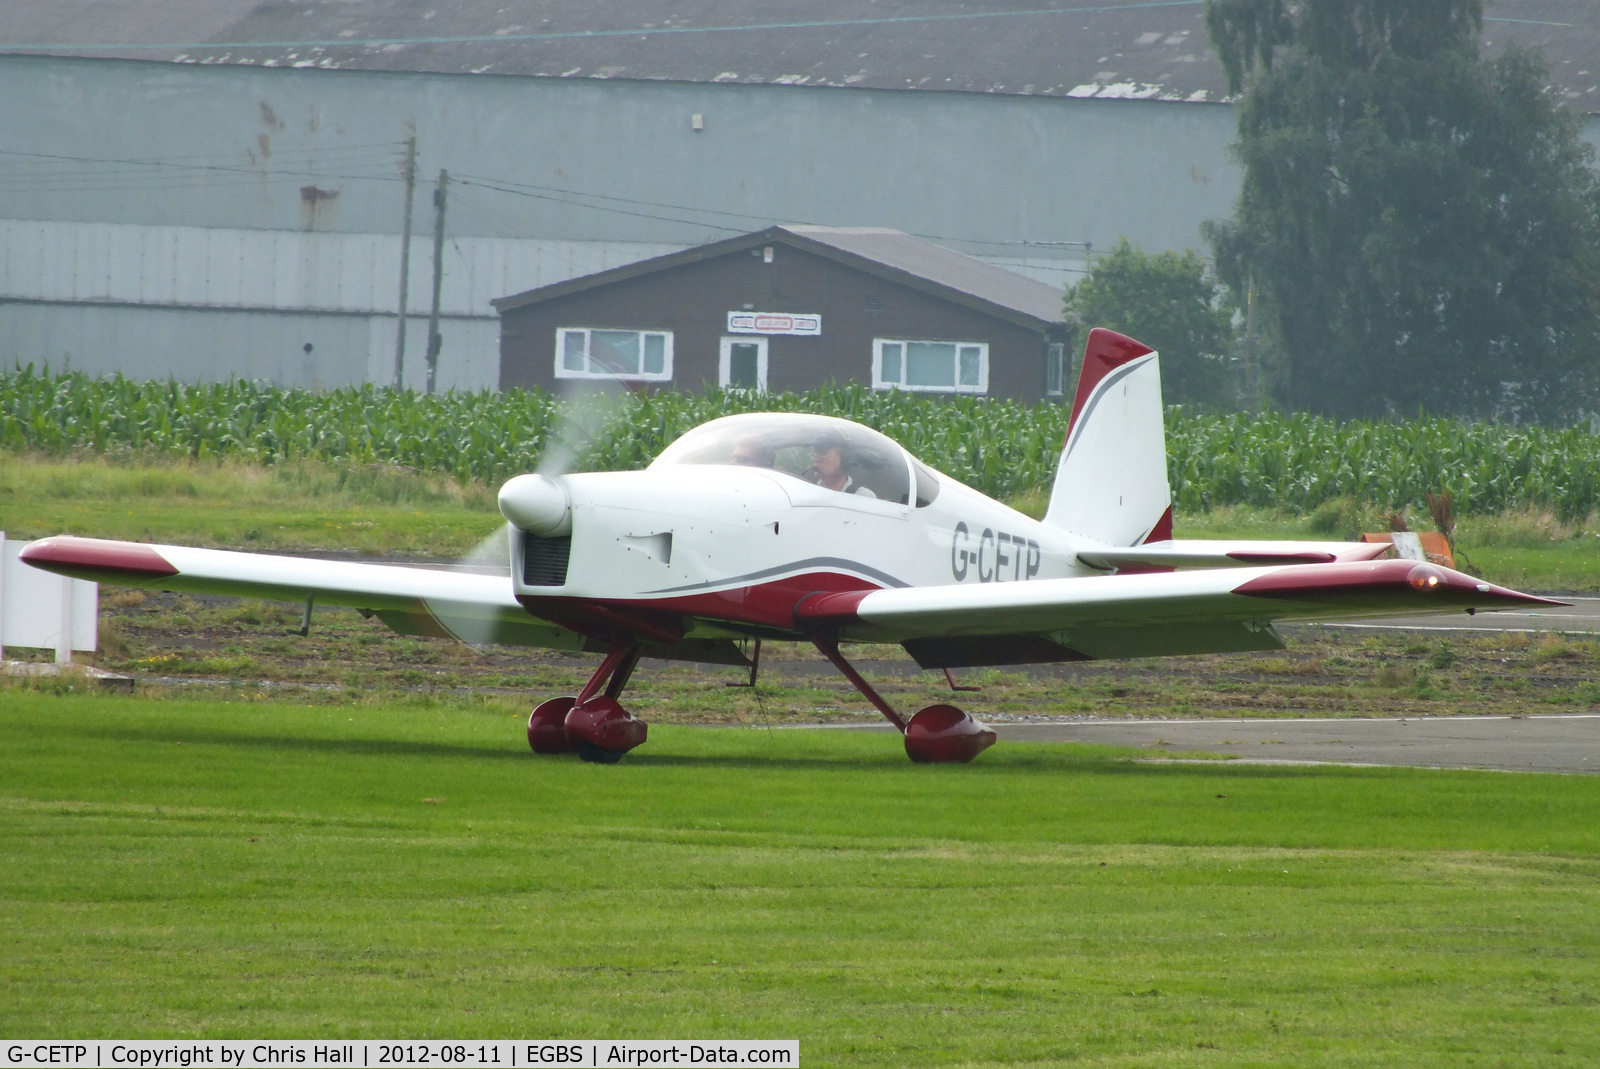 G-CETP, 2009 Vans RV-9A C/N PFA 320-14012, at Shobdon Airfield, Herefordshire